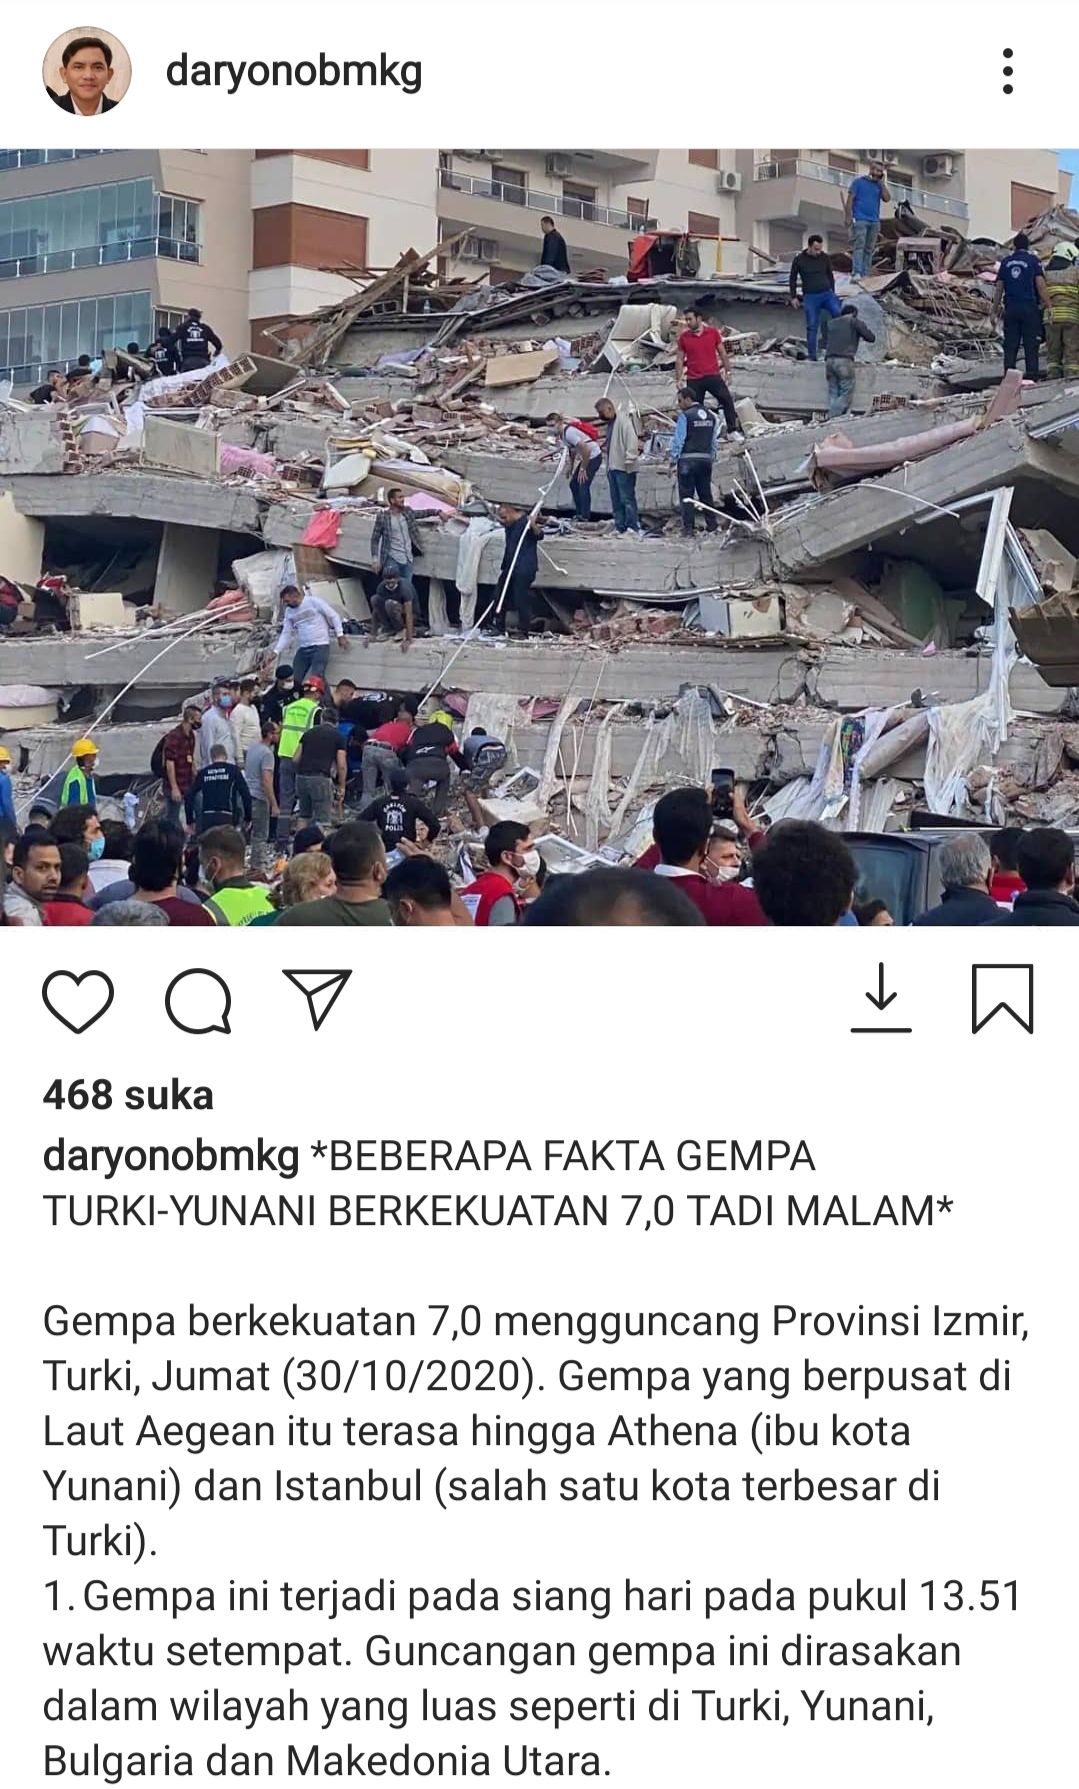 Postingan Daryono terkait gempa Turki berkekuatan 7,0